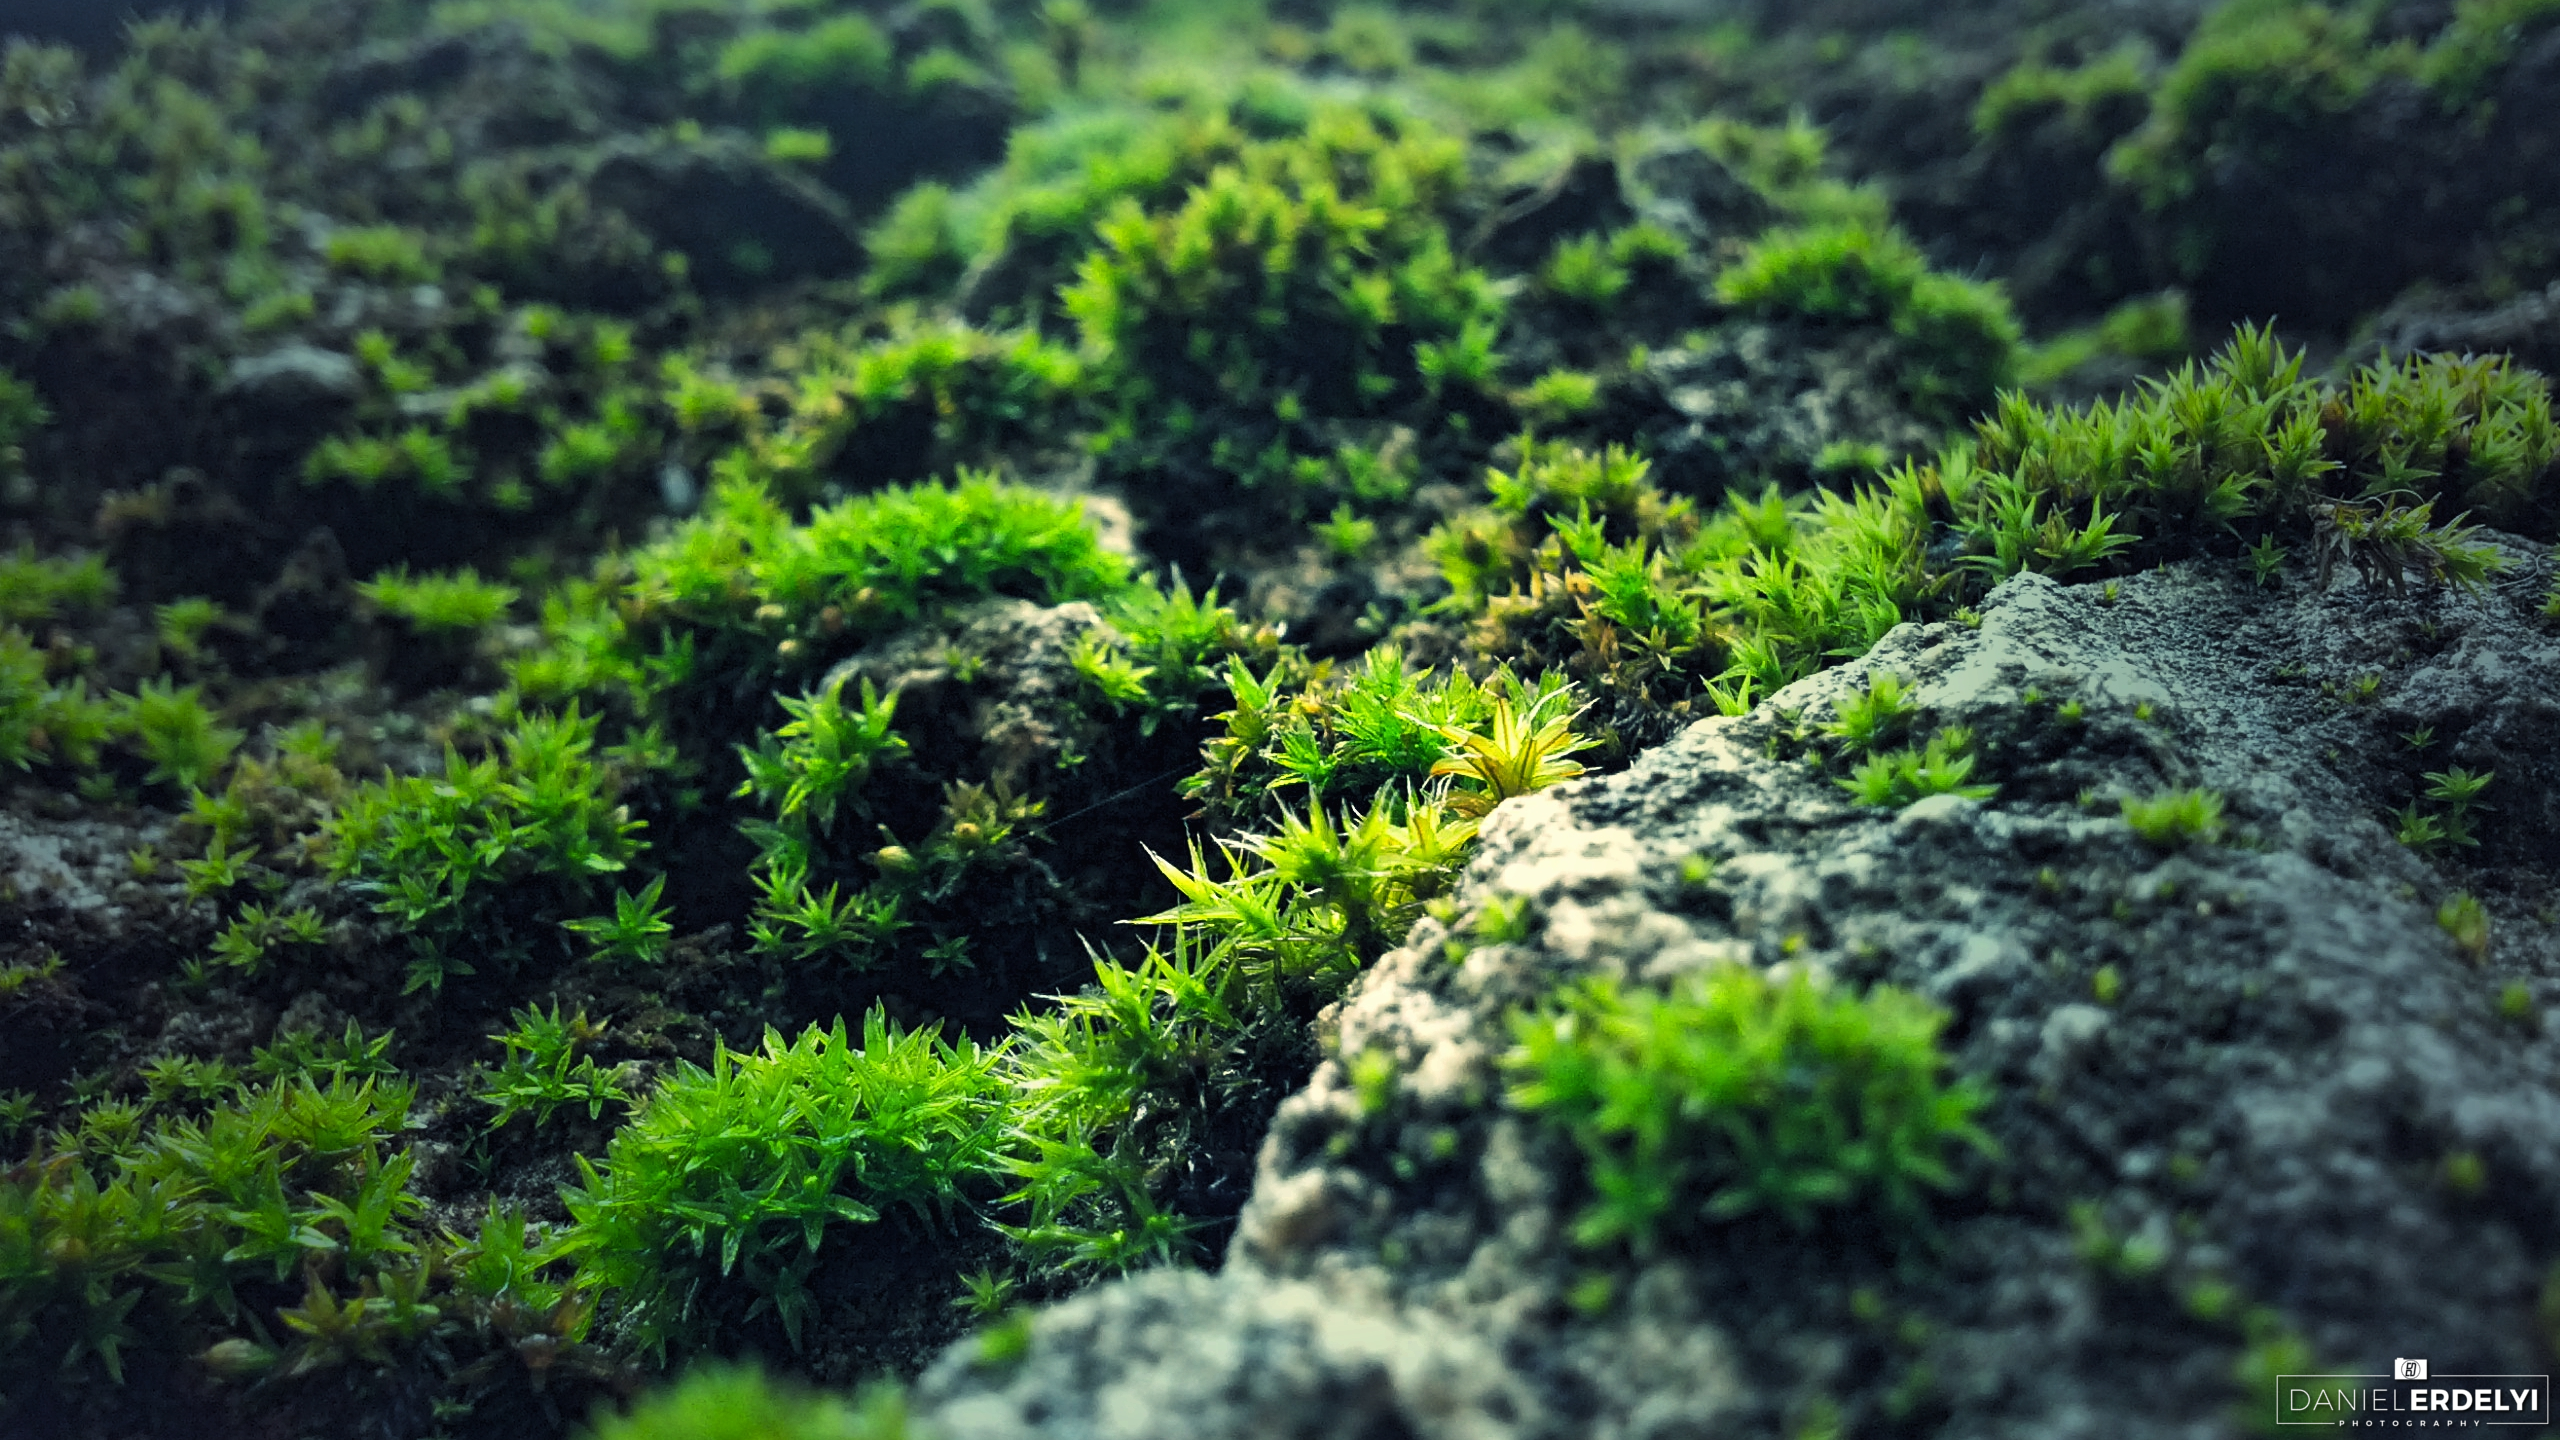 General 2560x1440 nature moss photography green blue rocks plants